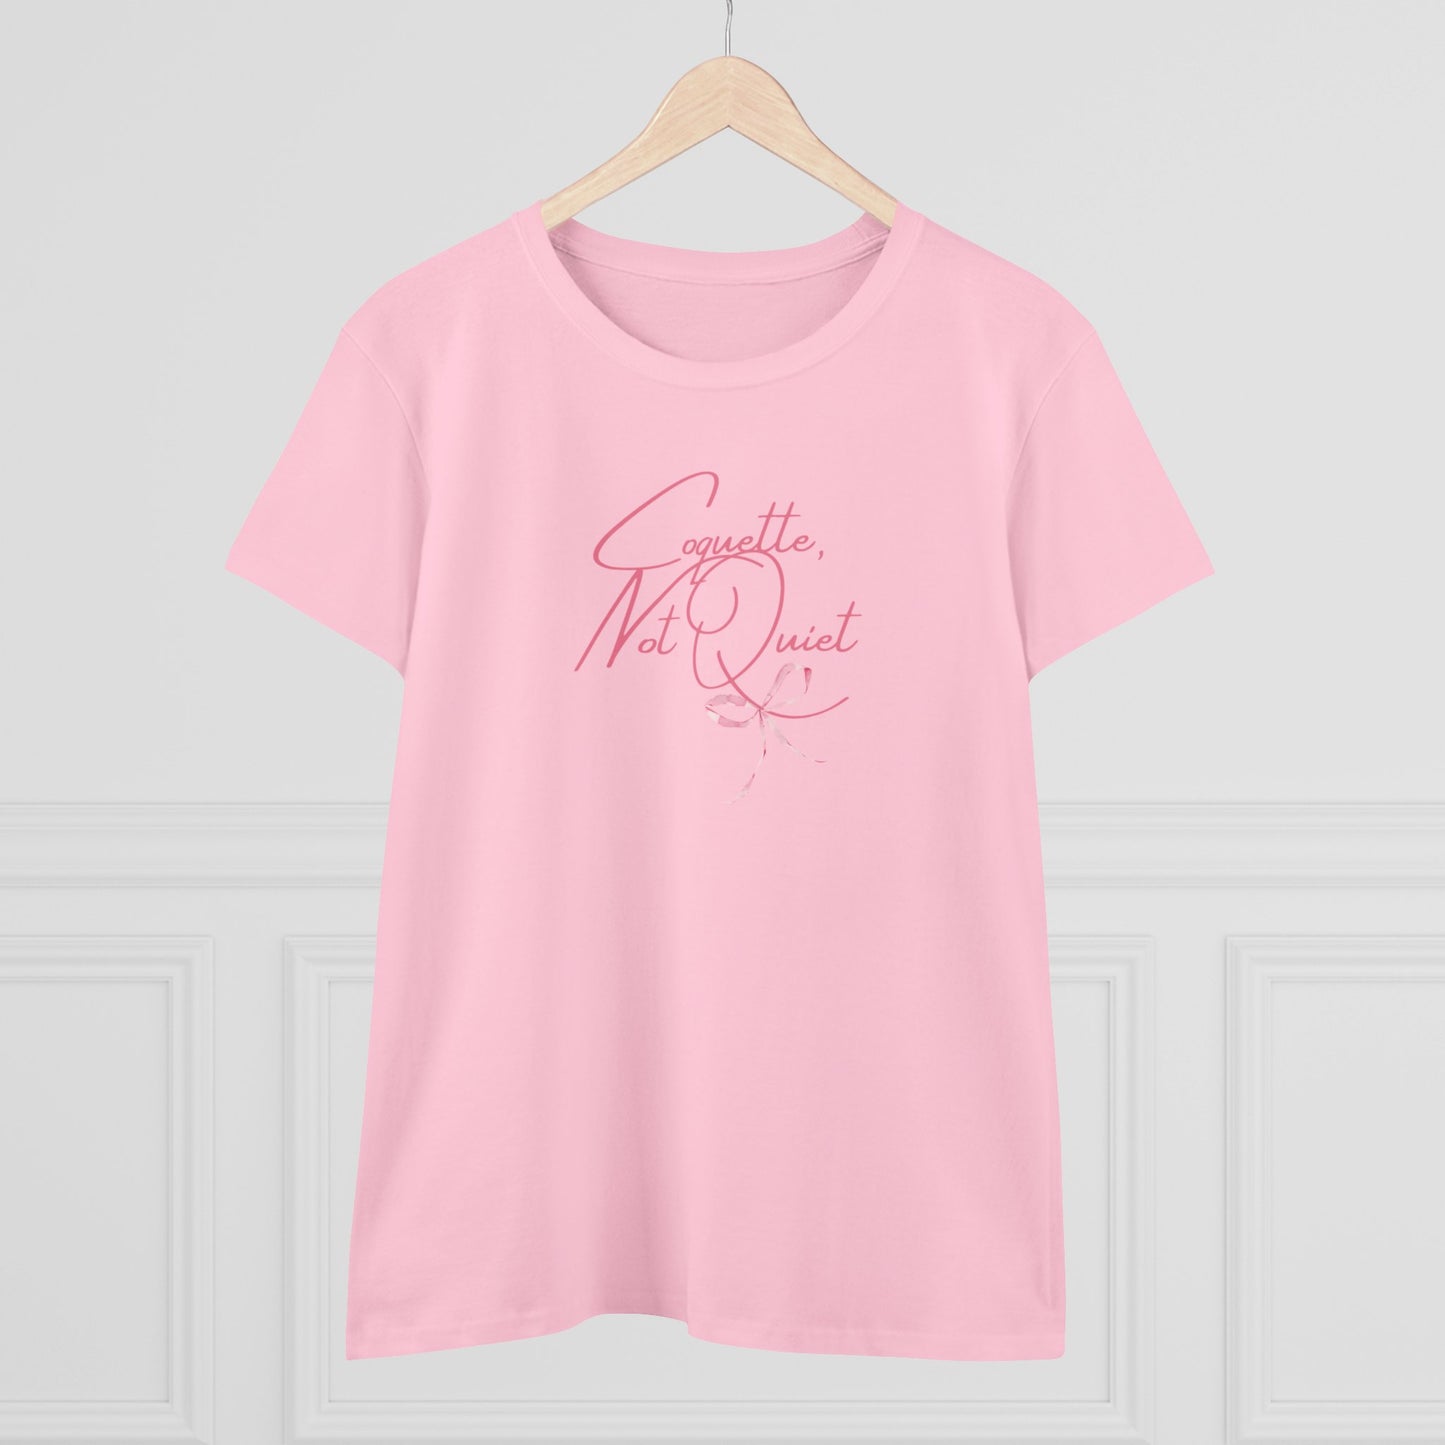 Coquette Tshirt, Coquette, Not Quiet, Coquette Tshirt, Grandmillenial Shirt, Pink Bow Tee, Girly Coquette Clothing